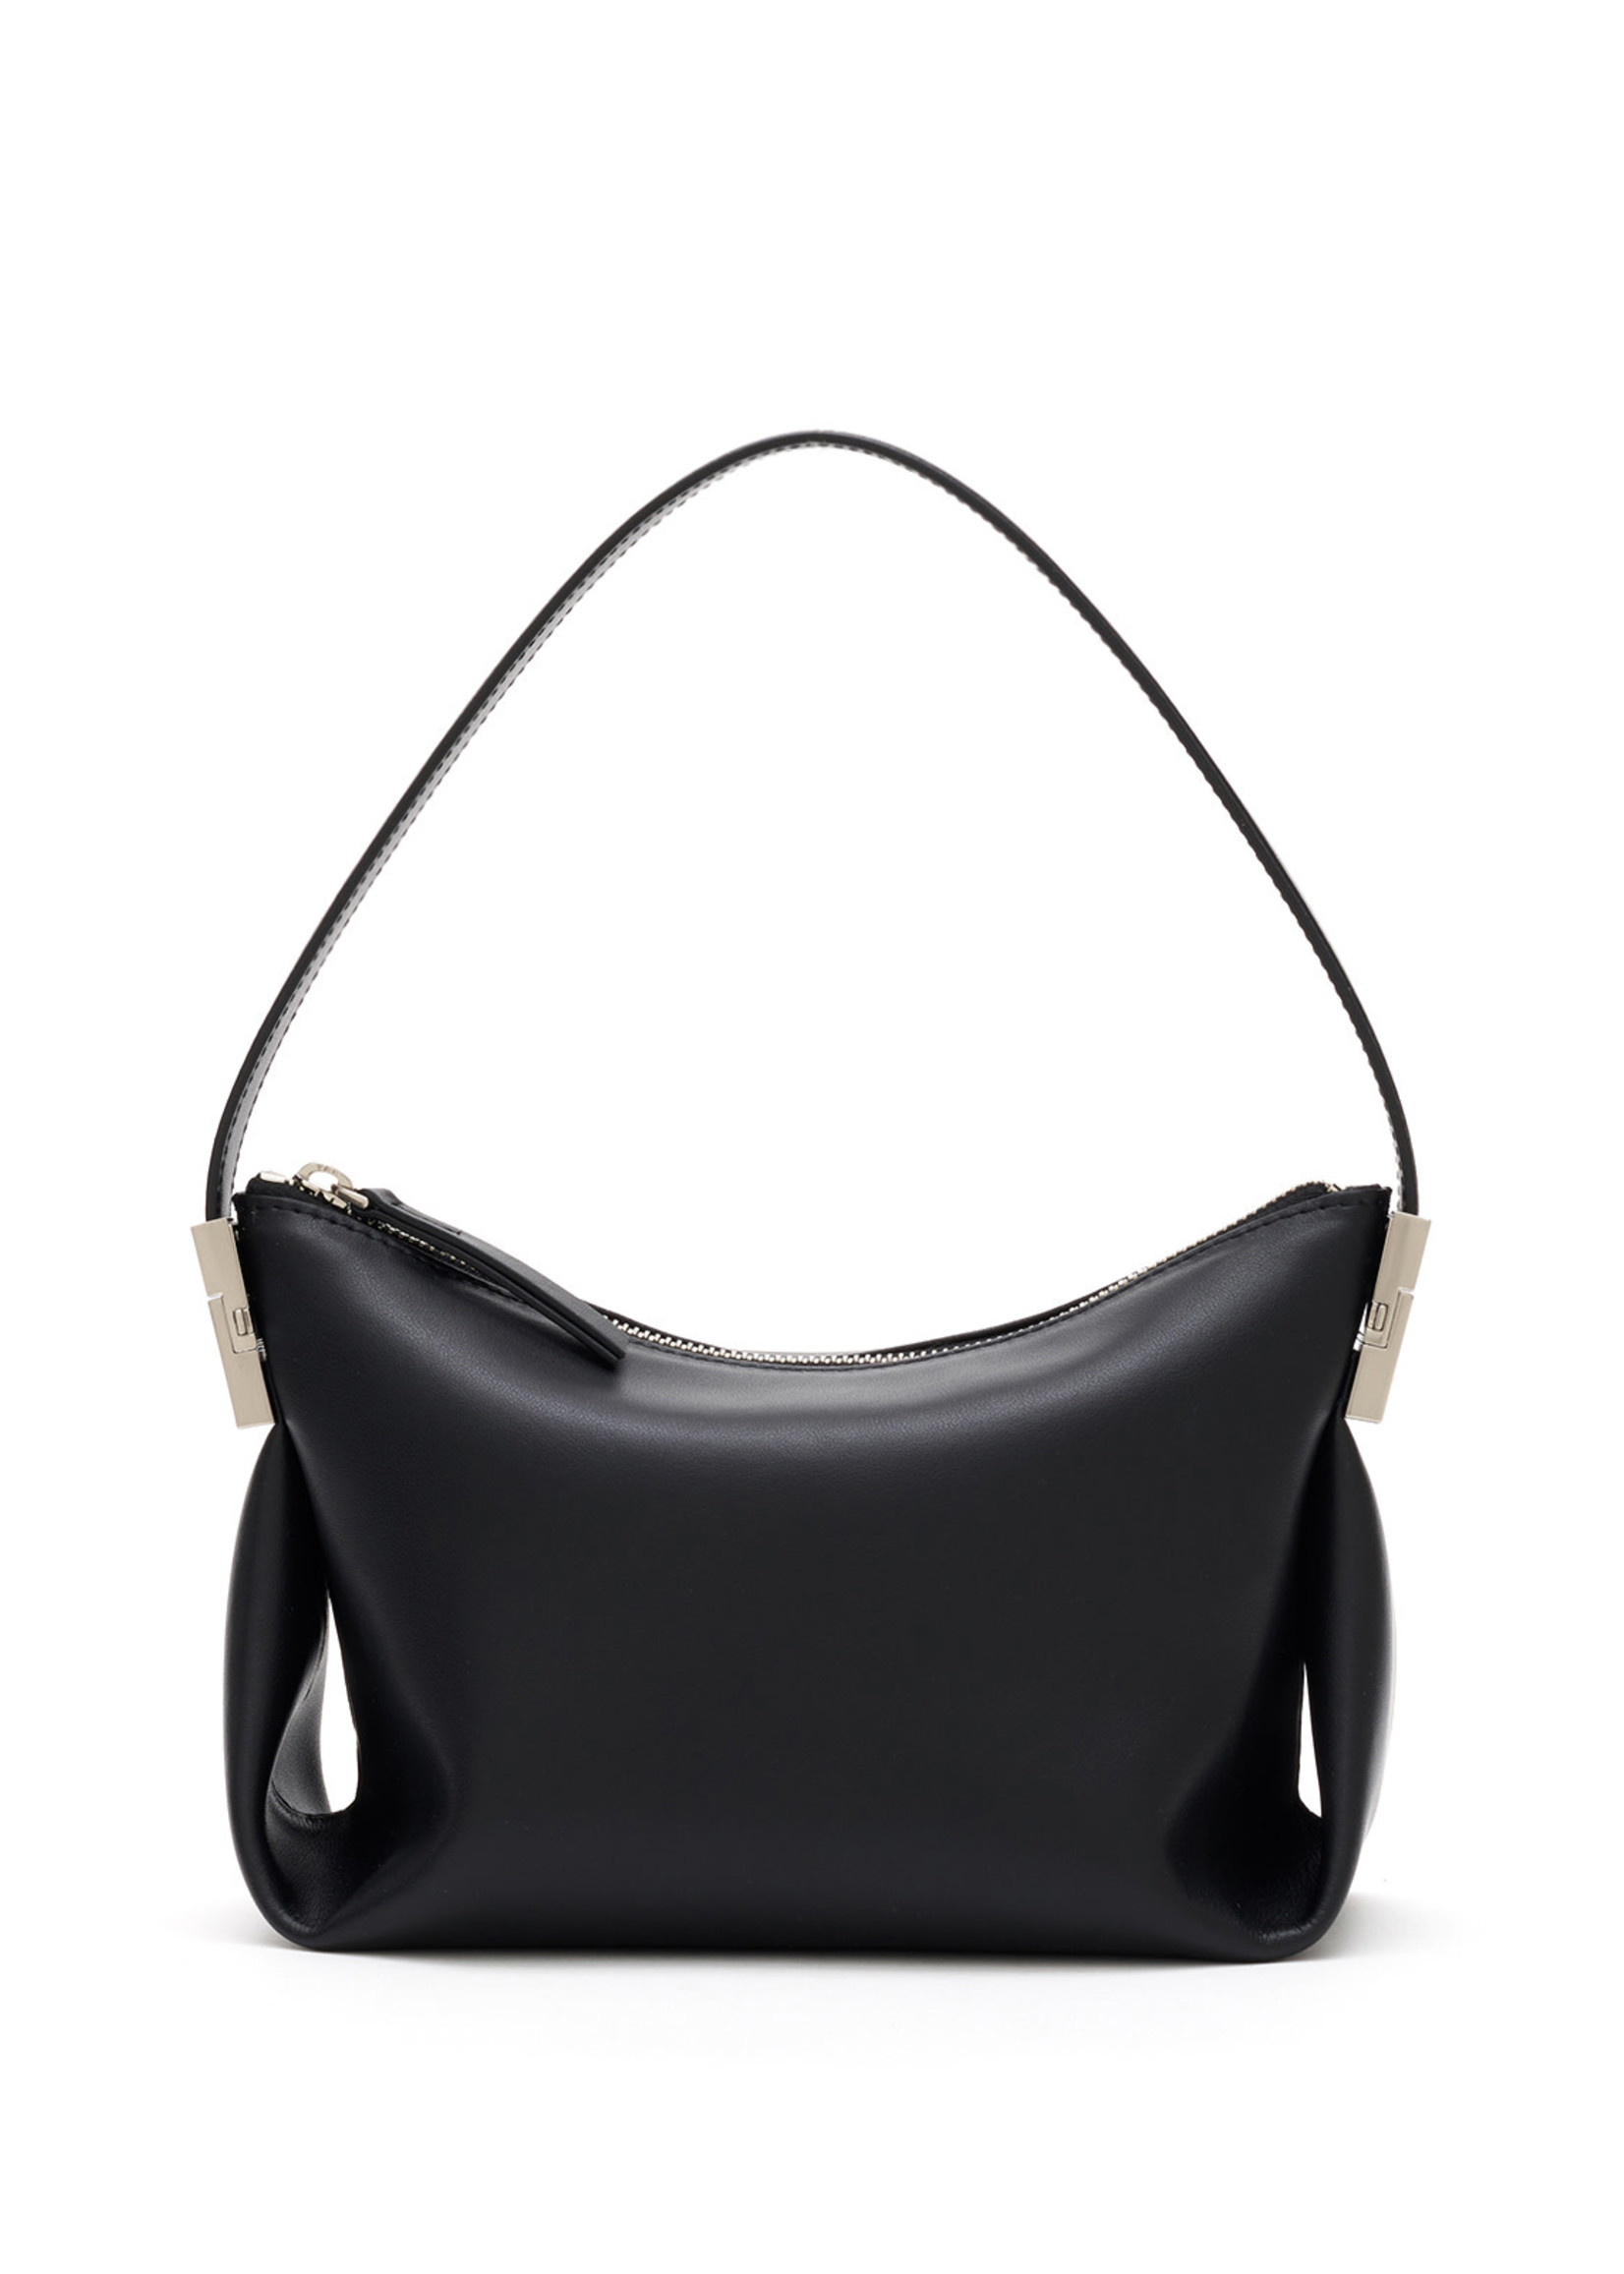 OSOI Bean Handbag in Black